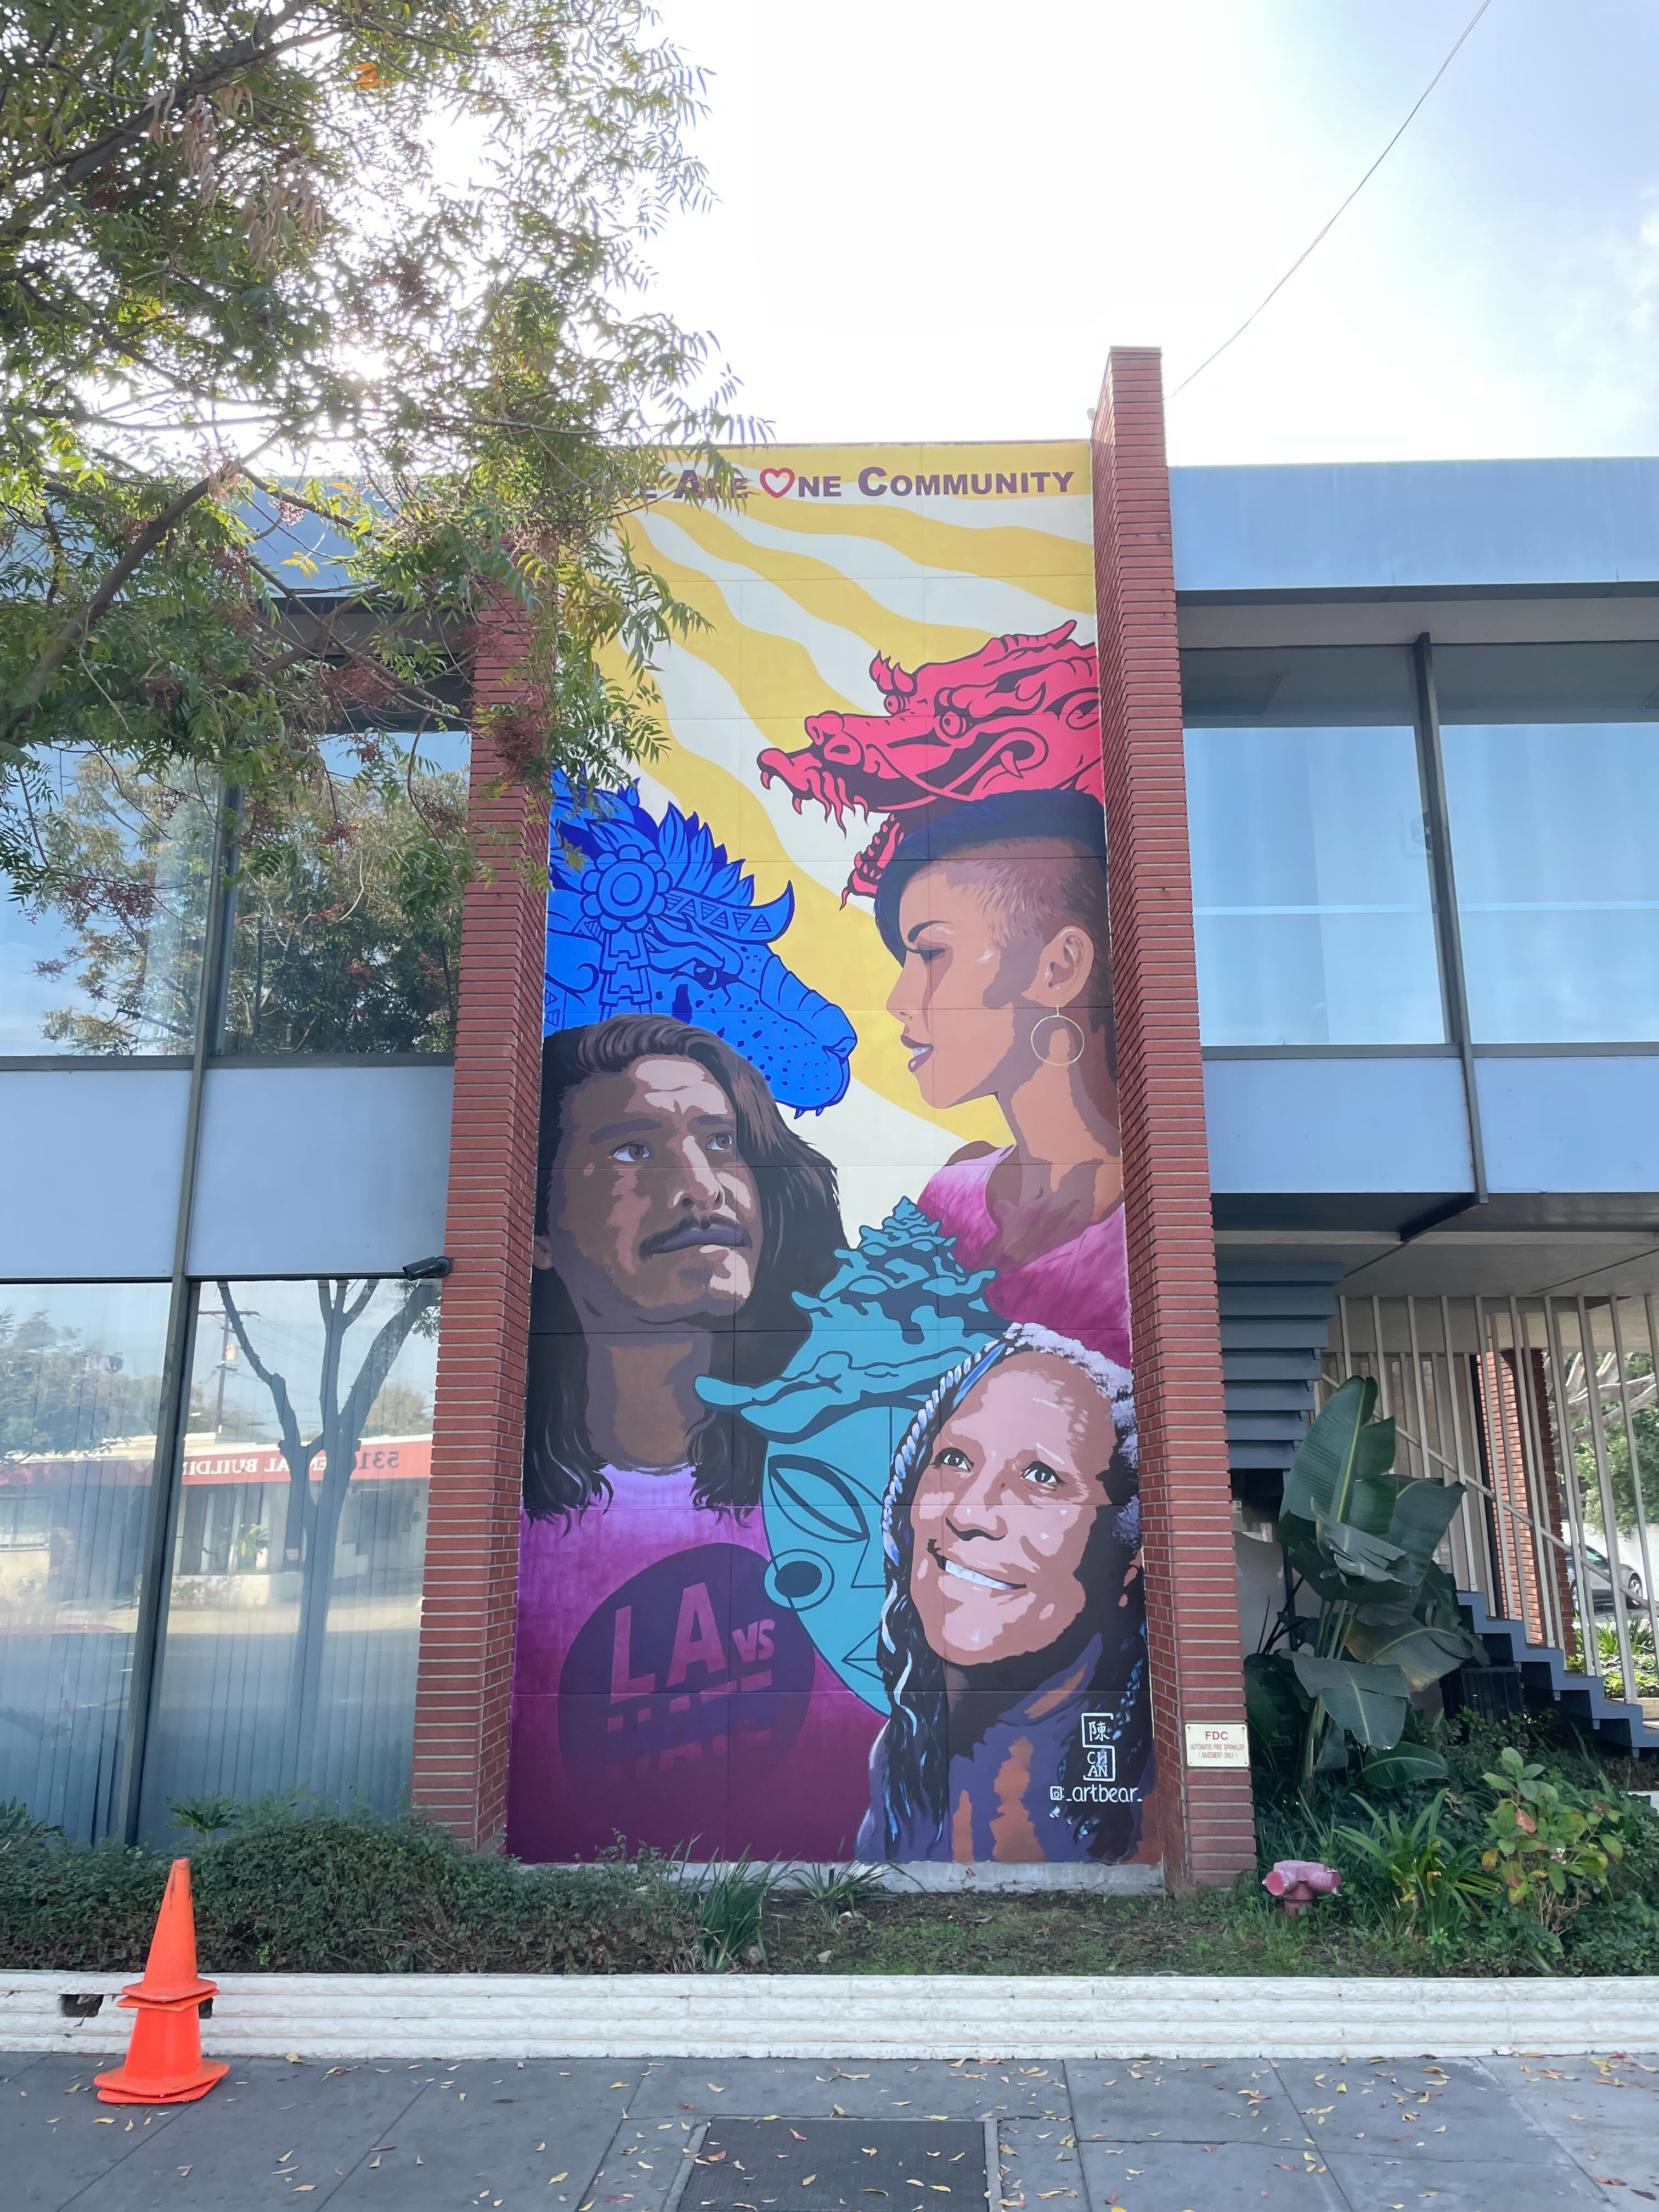 211 LA - We are ONE Community Mural 